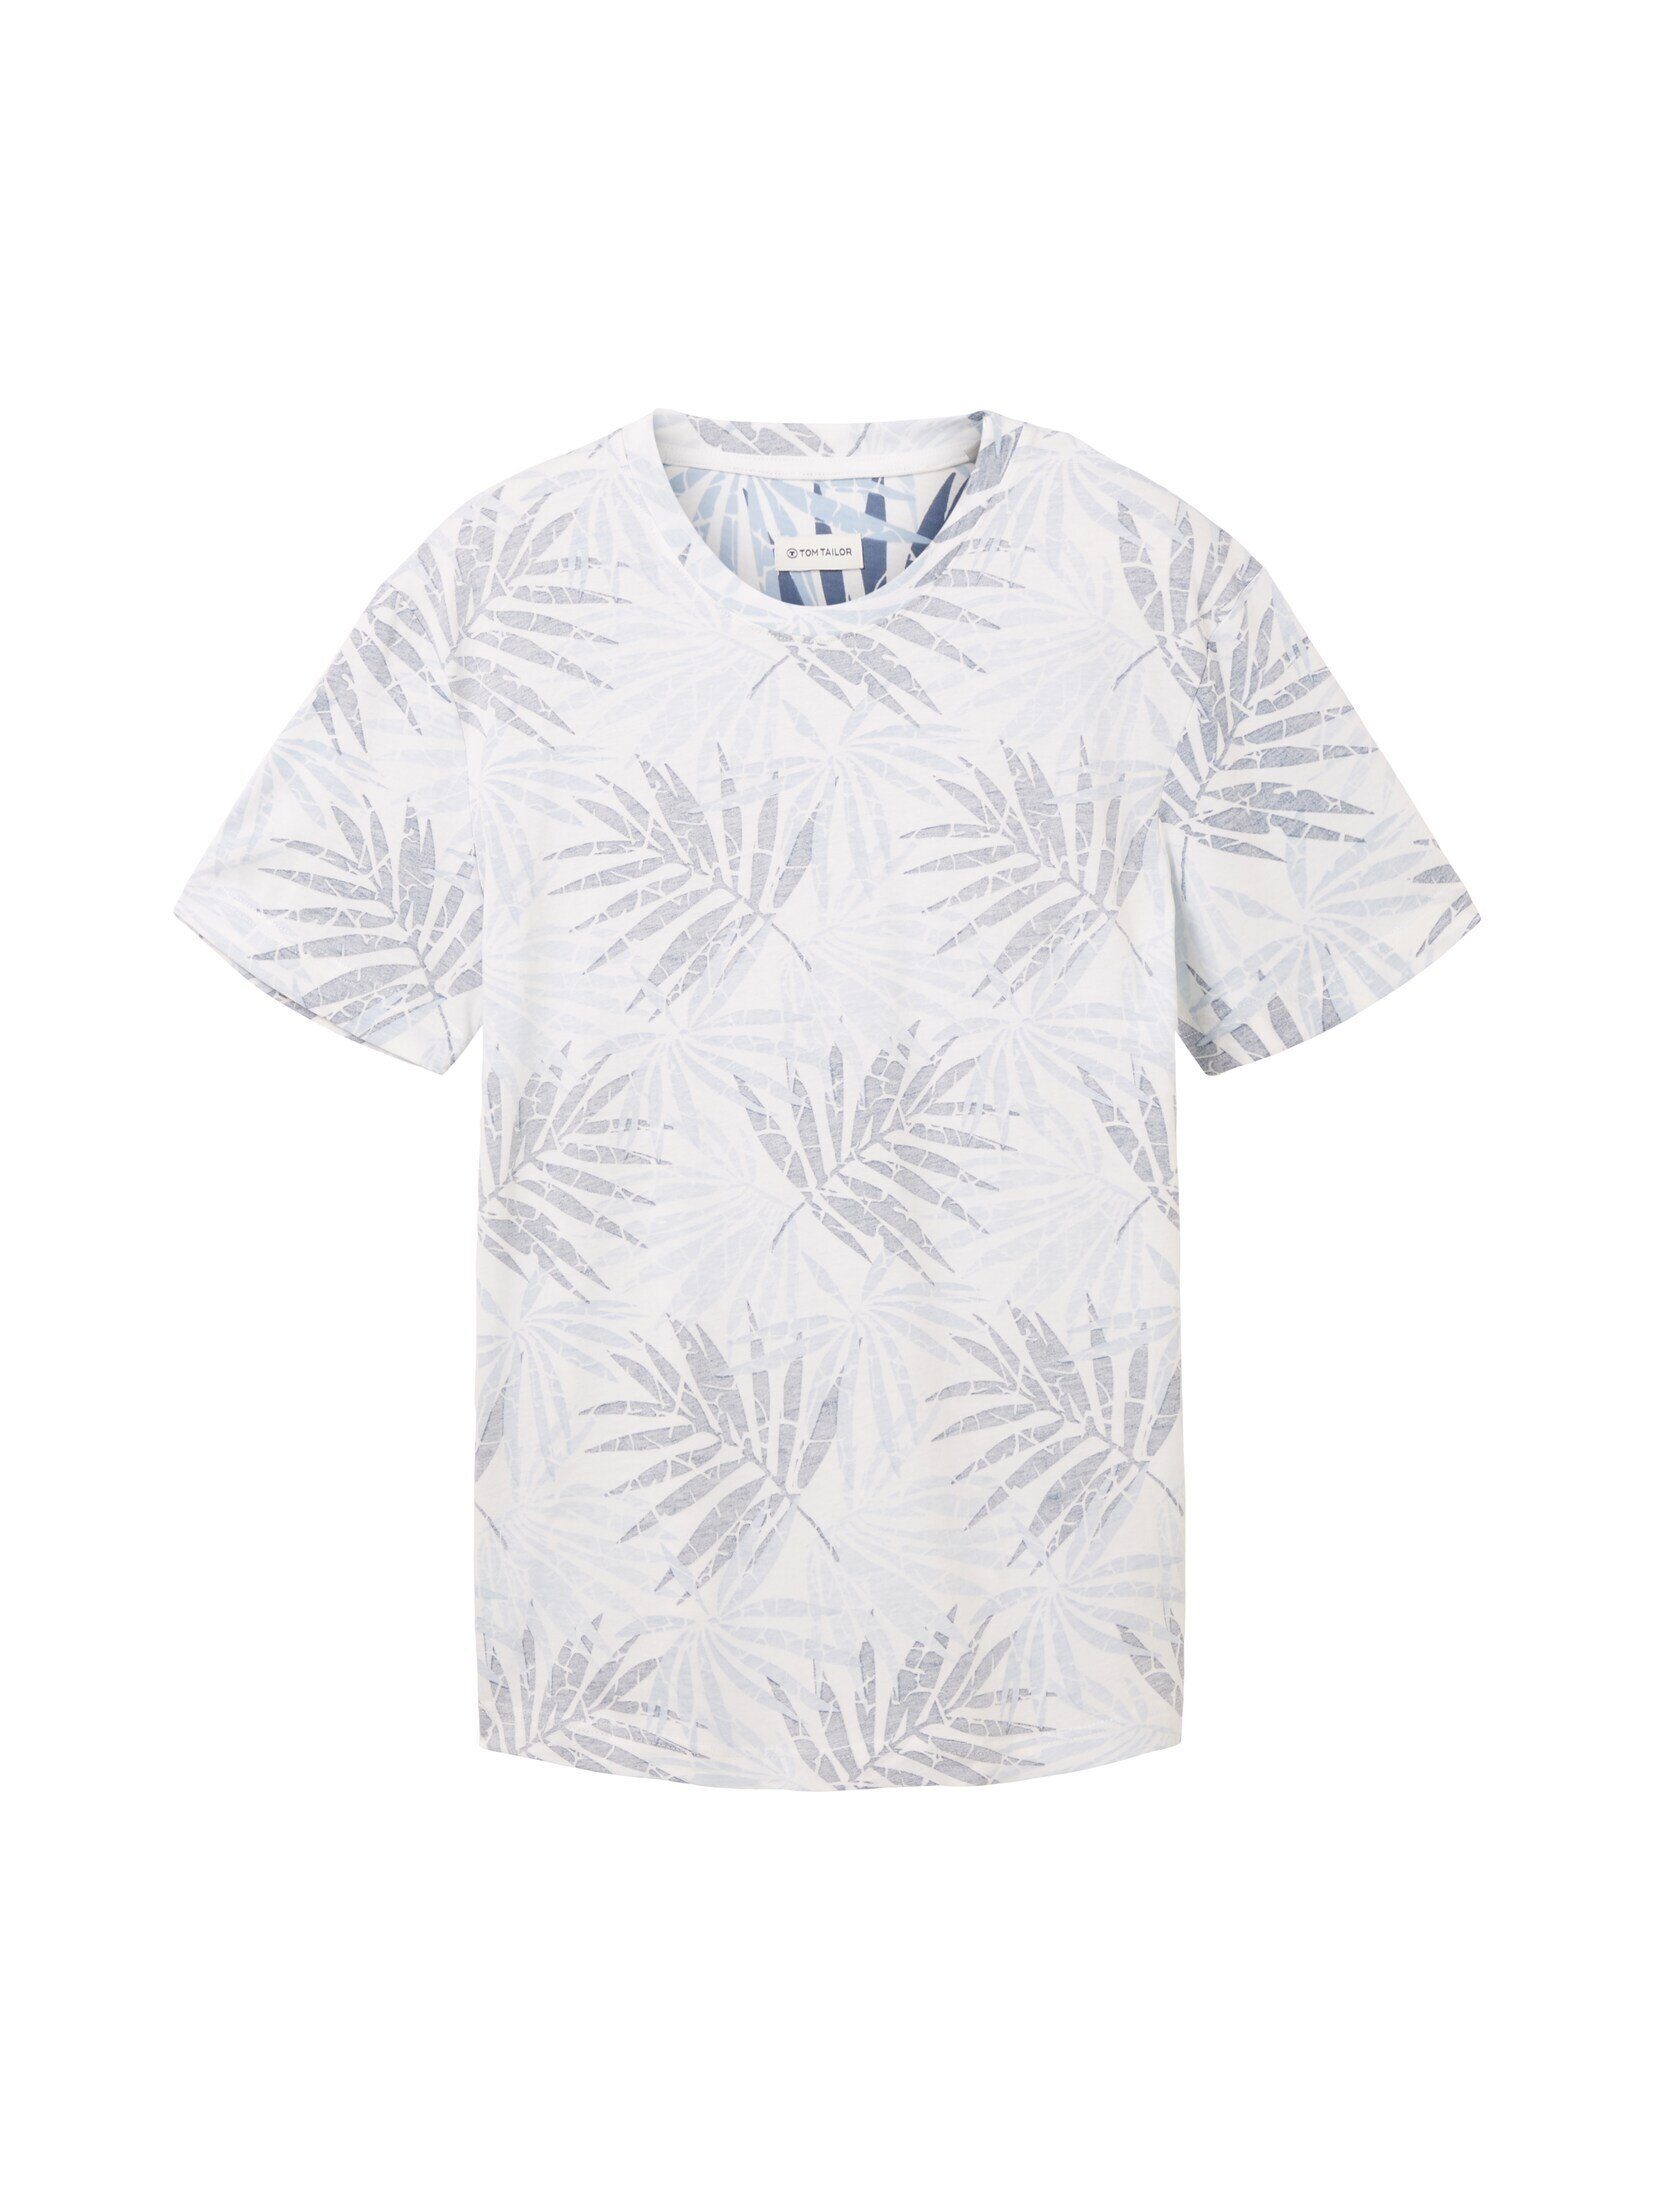 TOM TAILOR Allover-Print tonal T-Shirt design blue mit T-Shirt light leaf